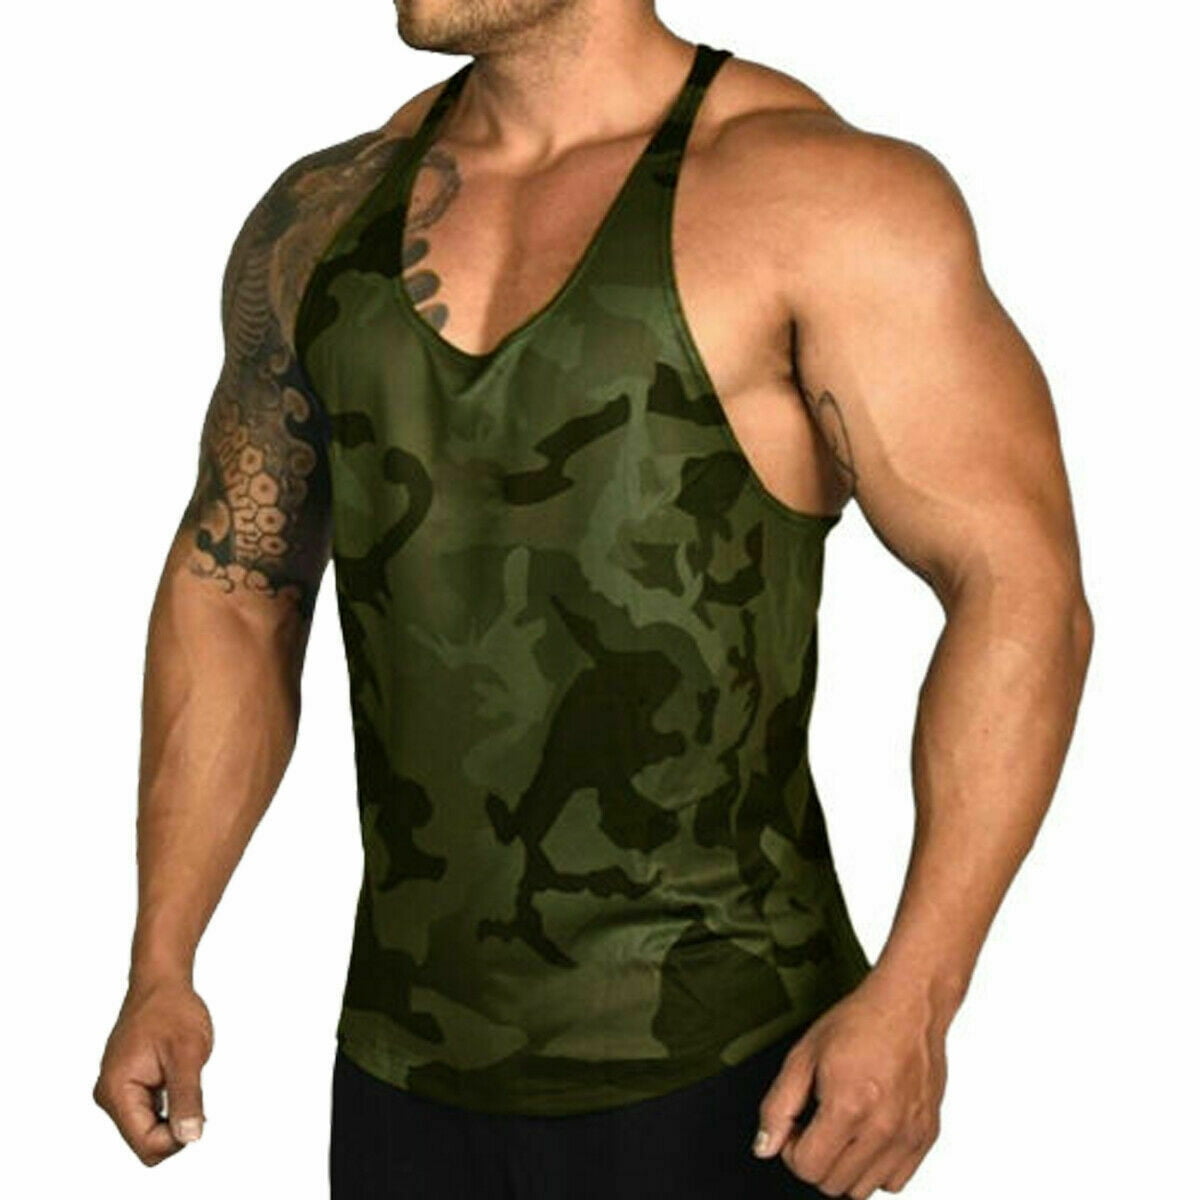 Mens Vest Plain Sleeveless Tank Top Summer Training Gym Sports Muscle T Shirt